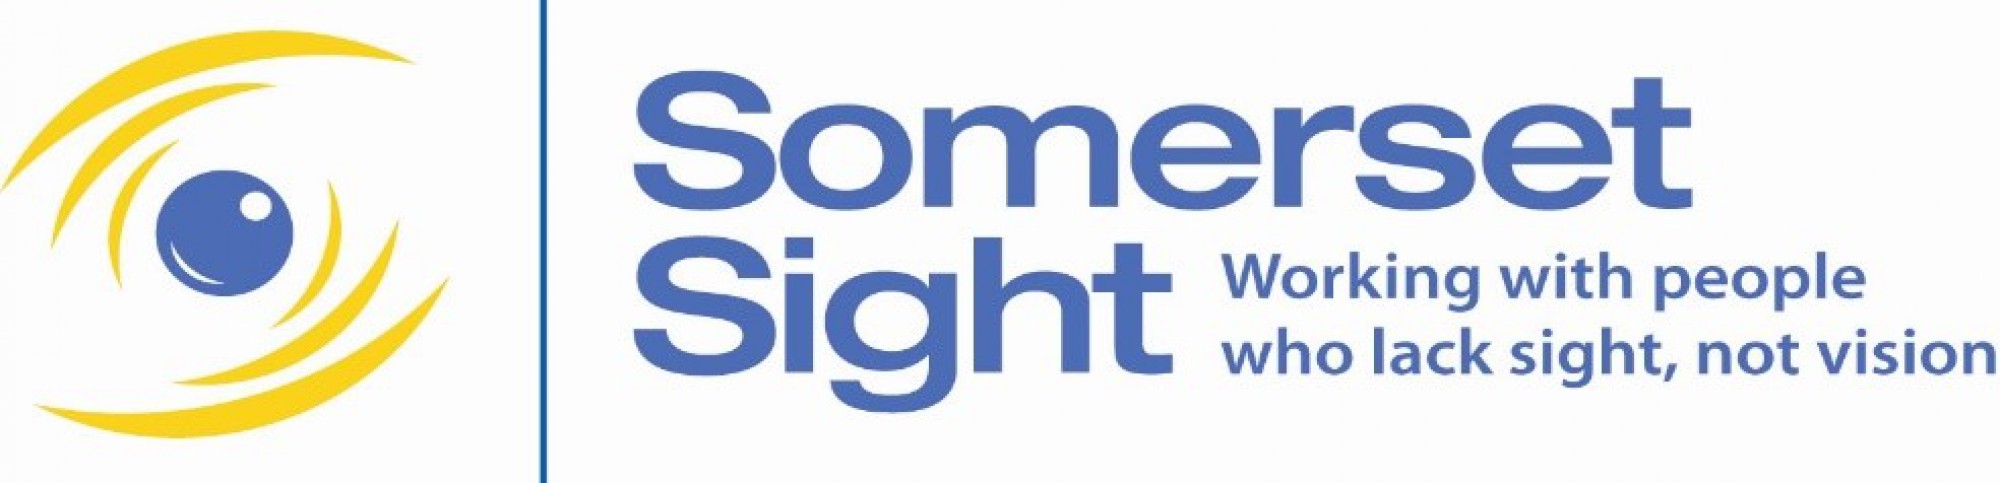 Somerset Sight Volunteers Recruiting